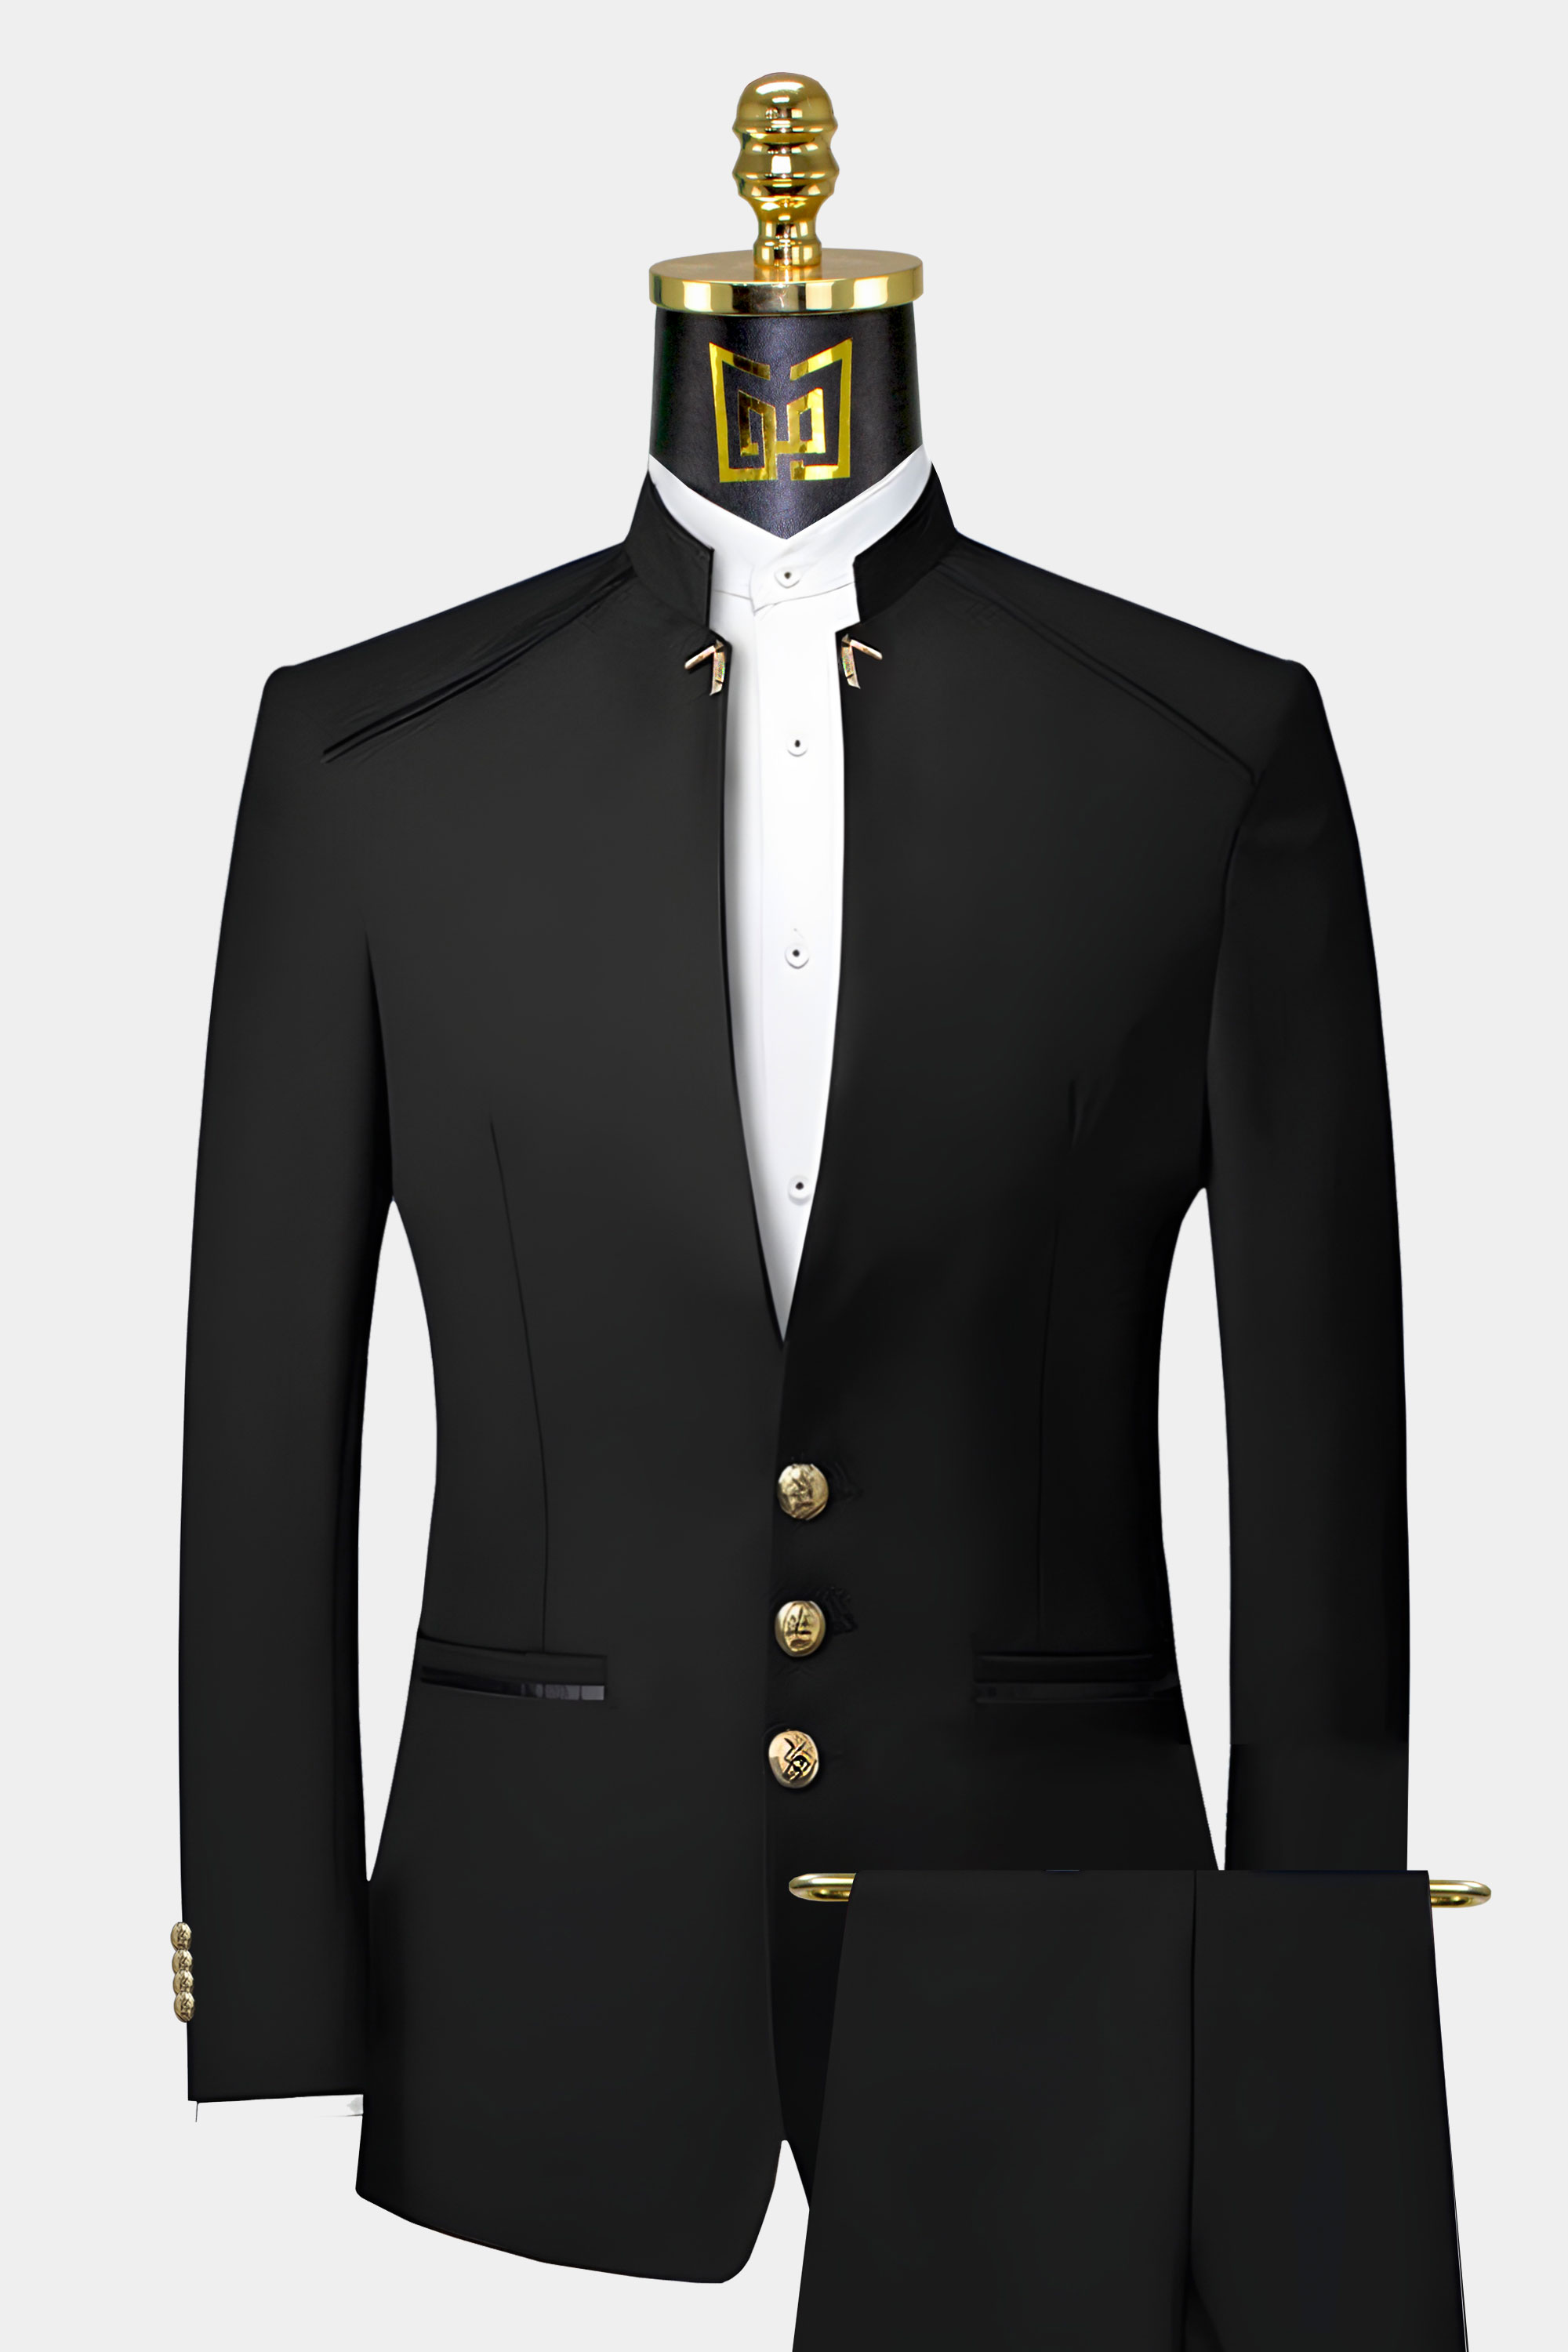 Black Mandarin Collar Suit - 2 Piece